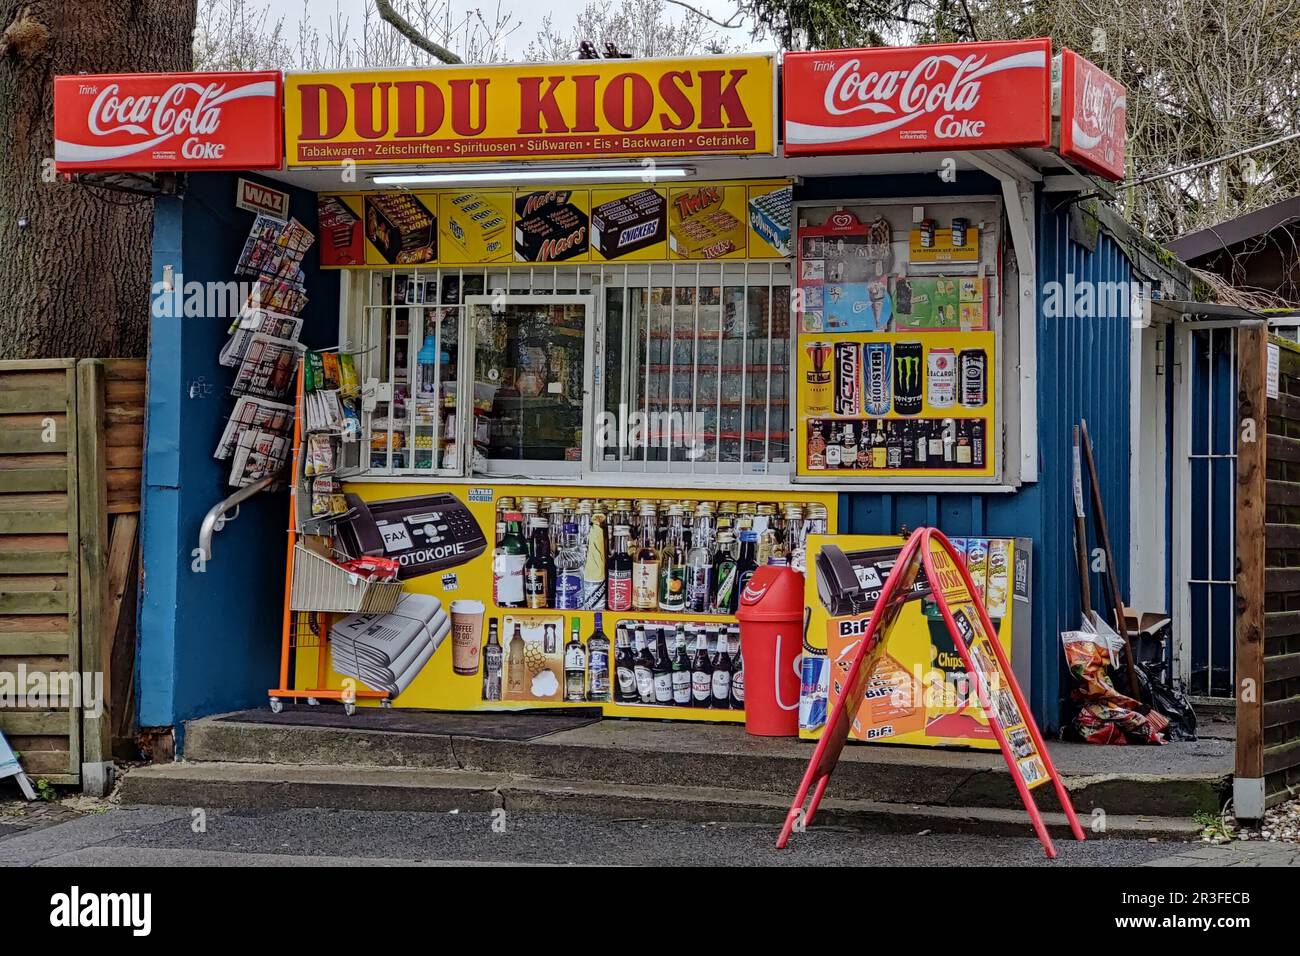 Dudu kiosk, drinking hall, Bochum-Gerthe, Bochum, Ruhr area, North Rhine-Westphalia, Germany, Europe Stock Photo